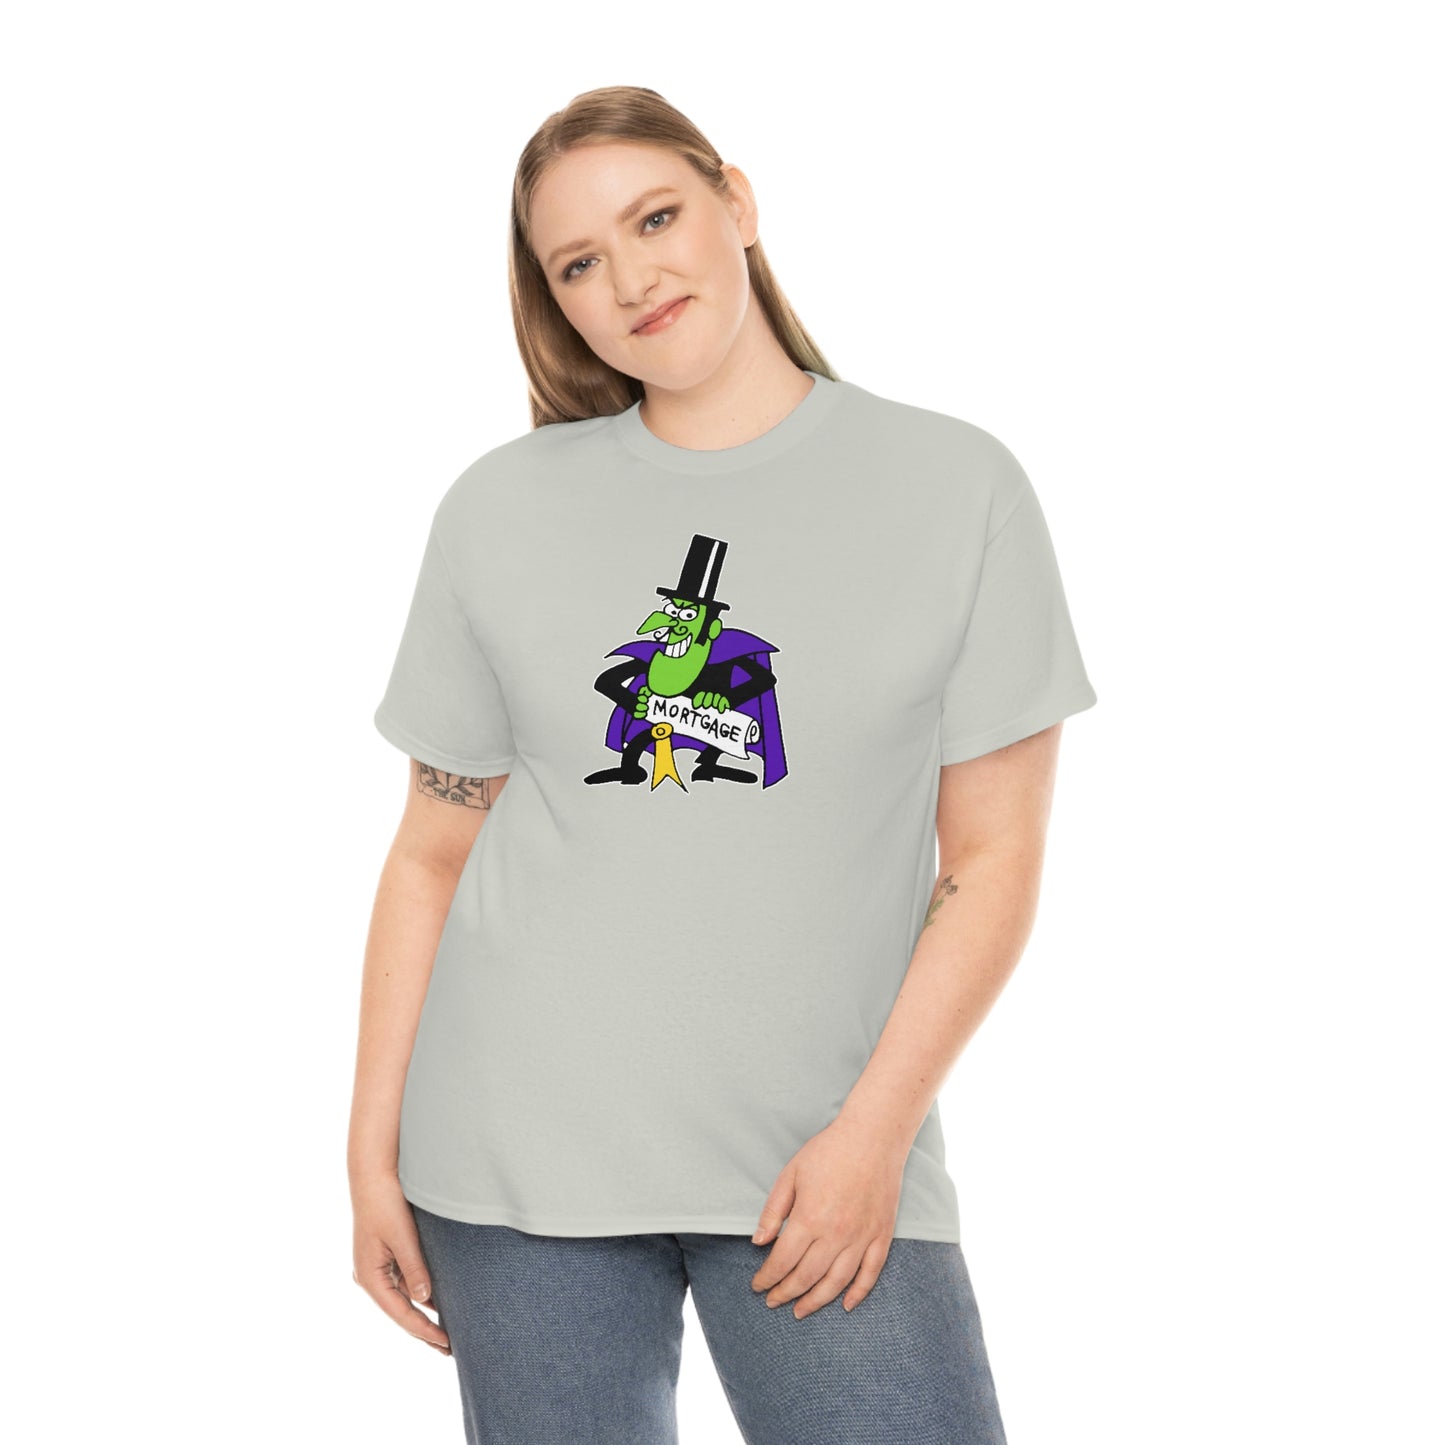 Snidley Whiplash T-Shirt